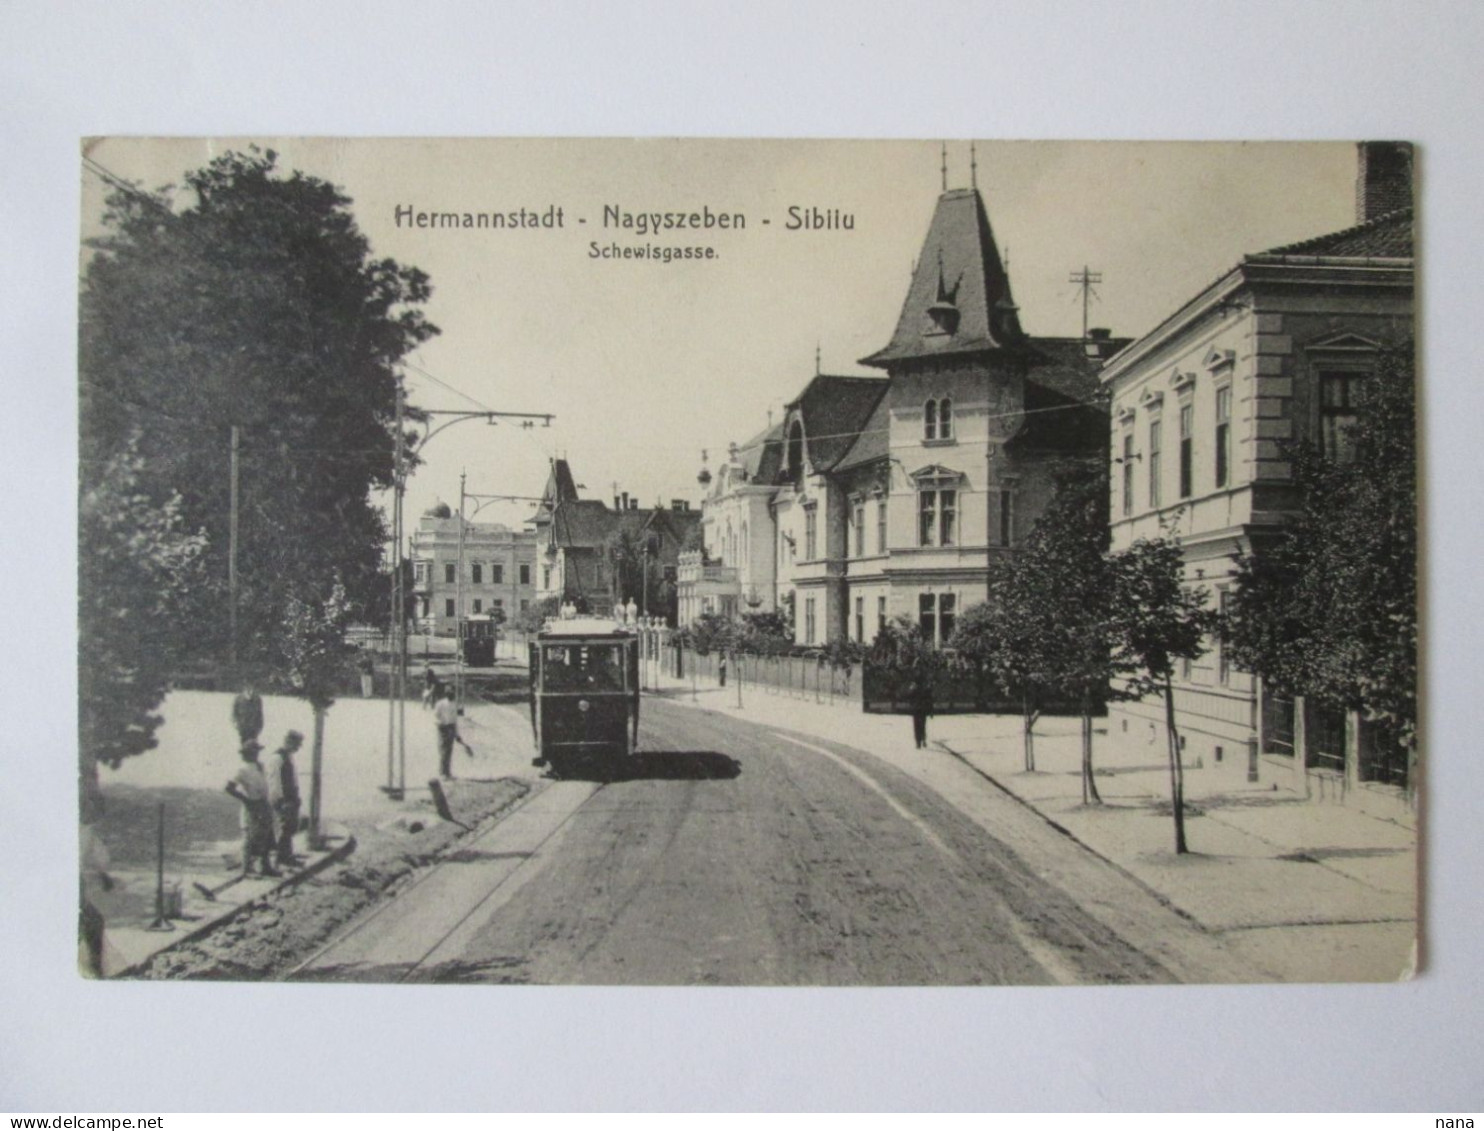 Romania-Sibiu:Station De Tramway,tramway C.p.voyage 1913 Timbre Rare/Tram Station,trams Mailed Postcard 1913 Rare Stamp - Romania